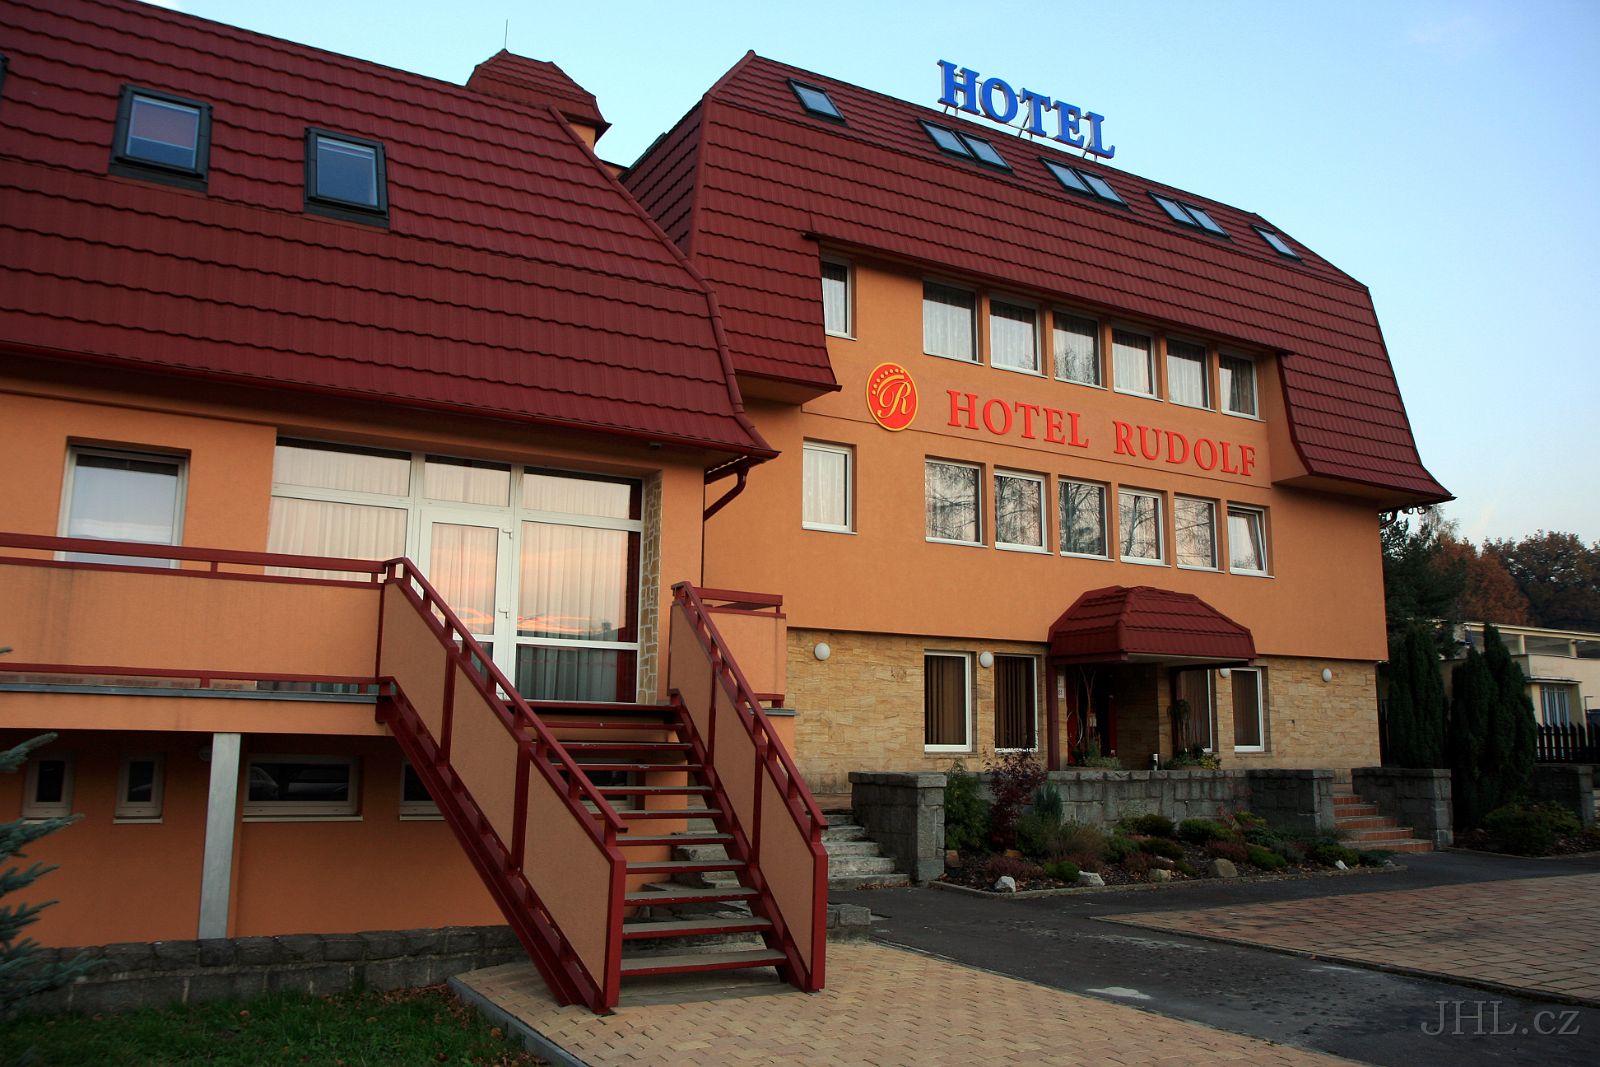 111030cc040.JPG - během odpoledne jsme se s Martinem přesunuli do Havířova do hotelu Rudolf (www.hotelrudolf.cz) / hotel Rudolf in Havirov